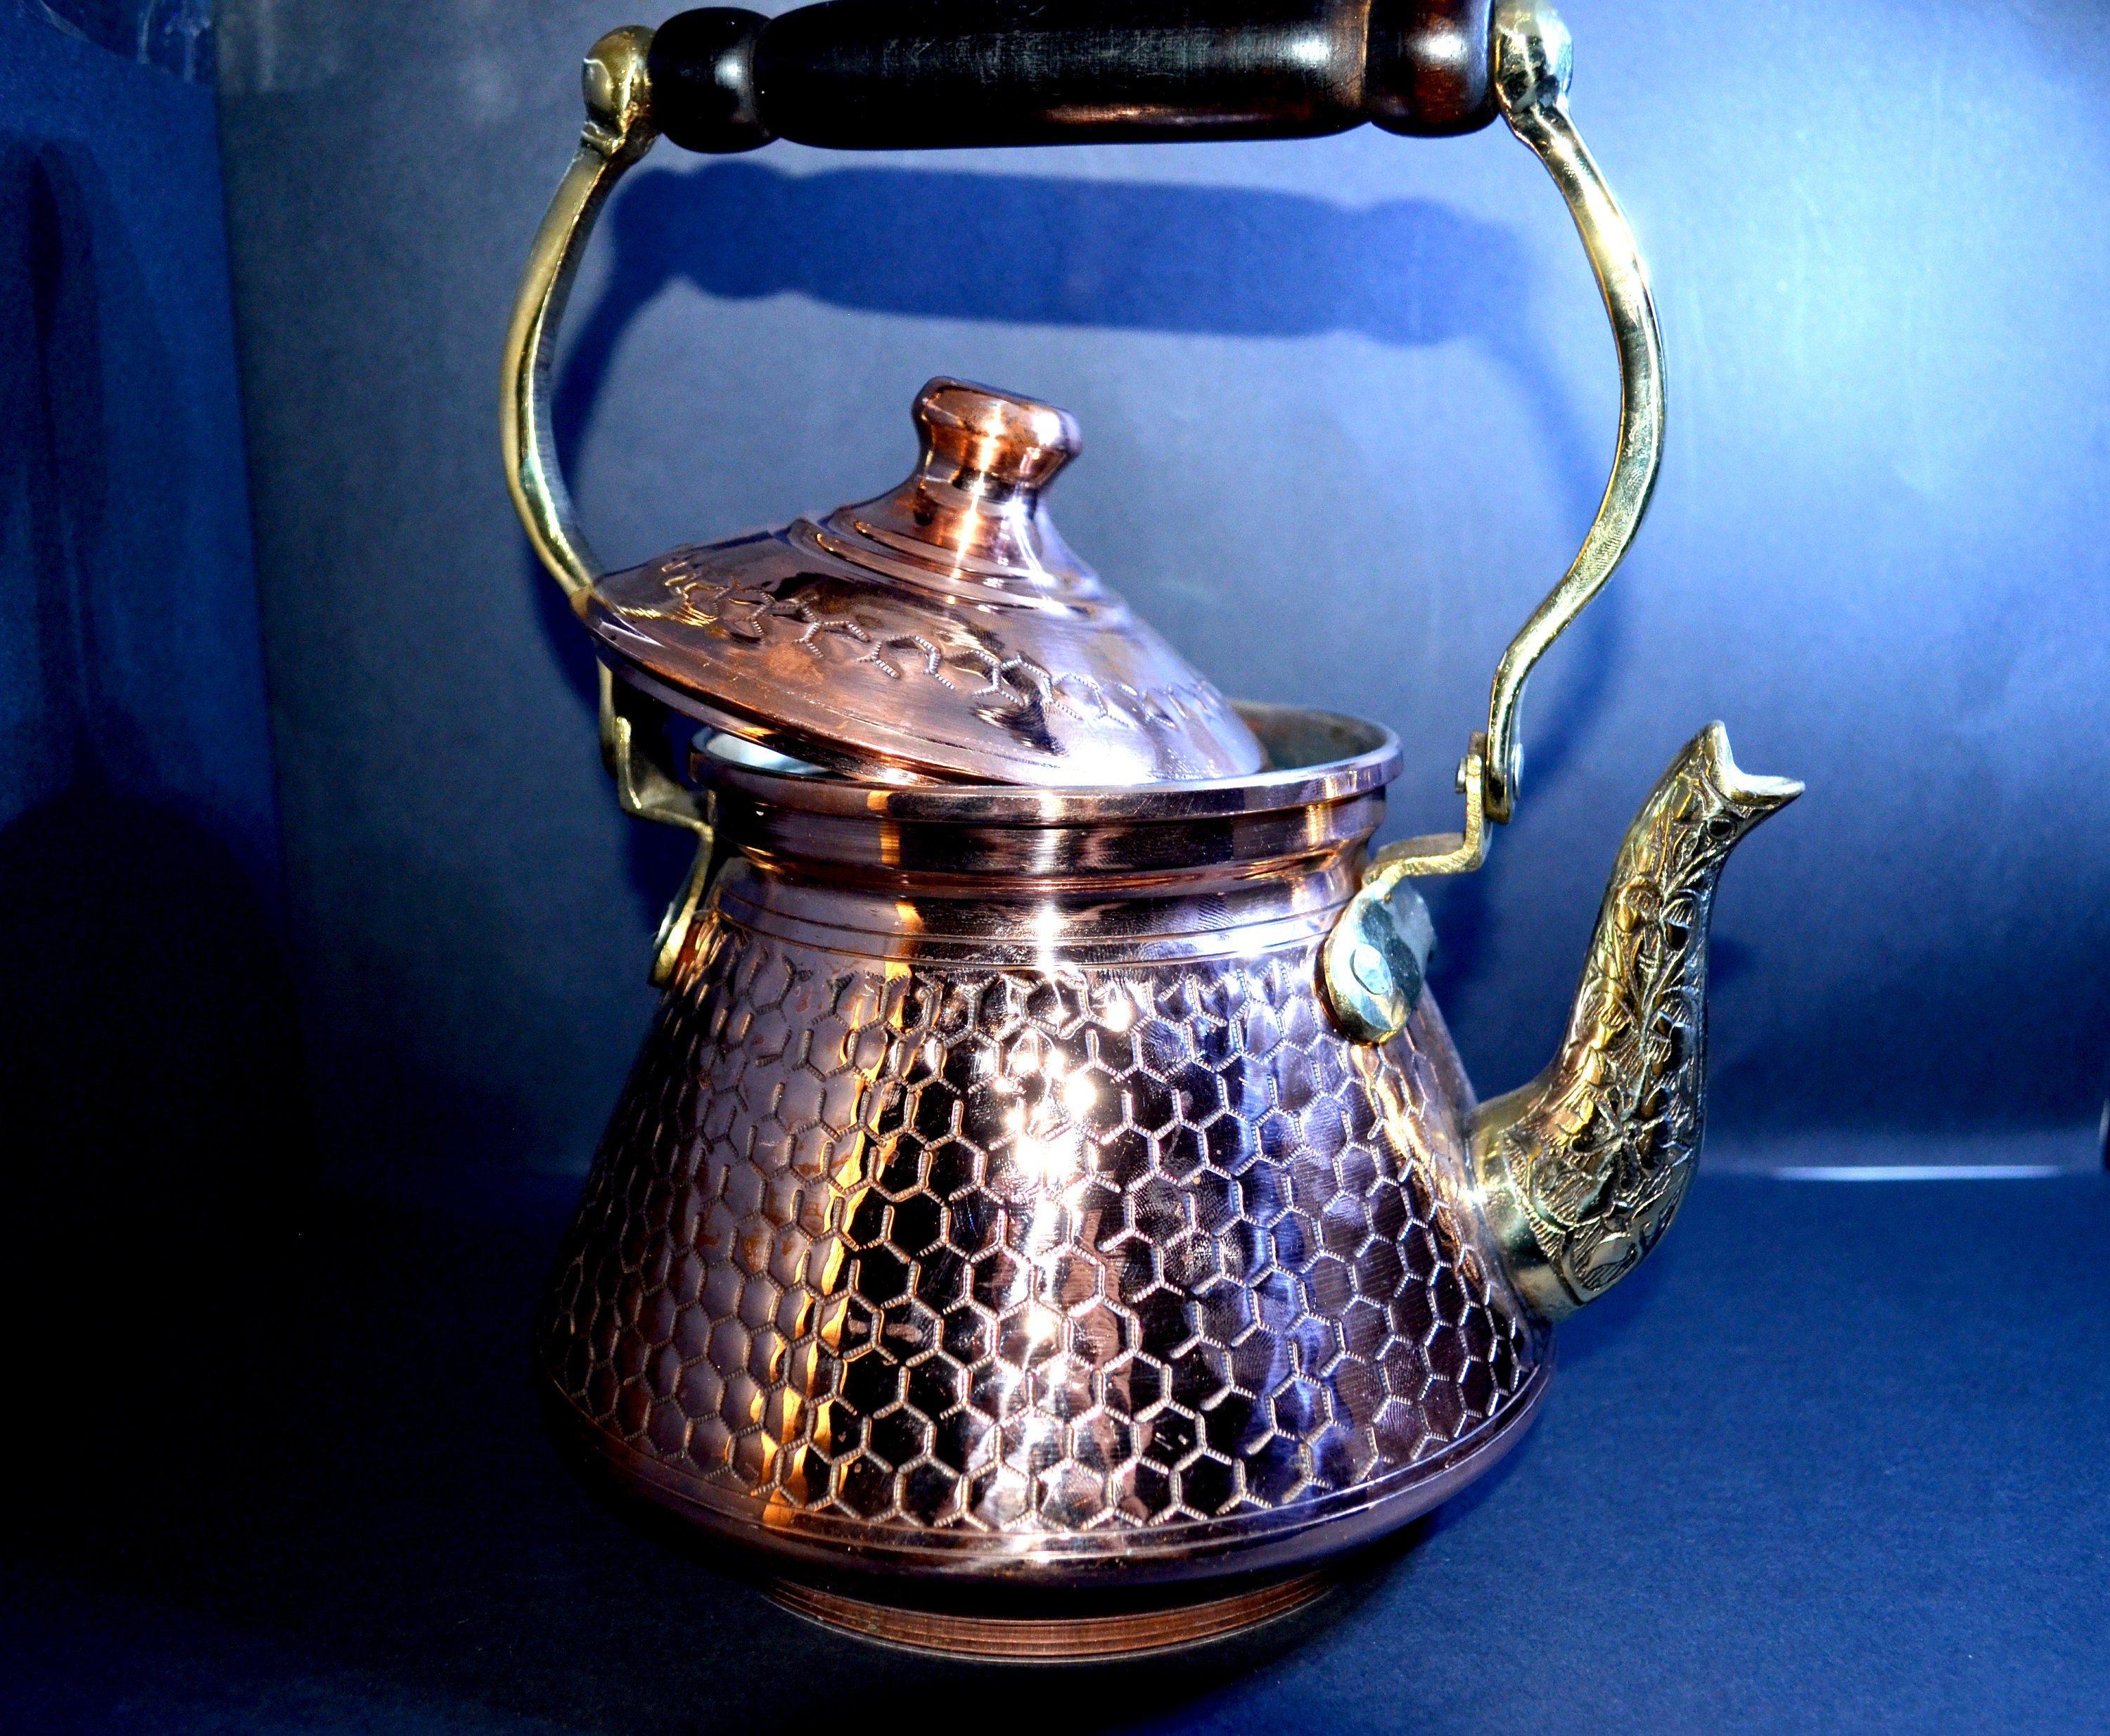 Copper Camping Teapot Handmade Antique Copper Usable Tea 